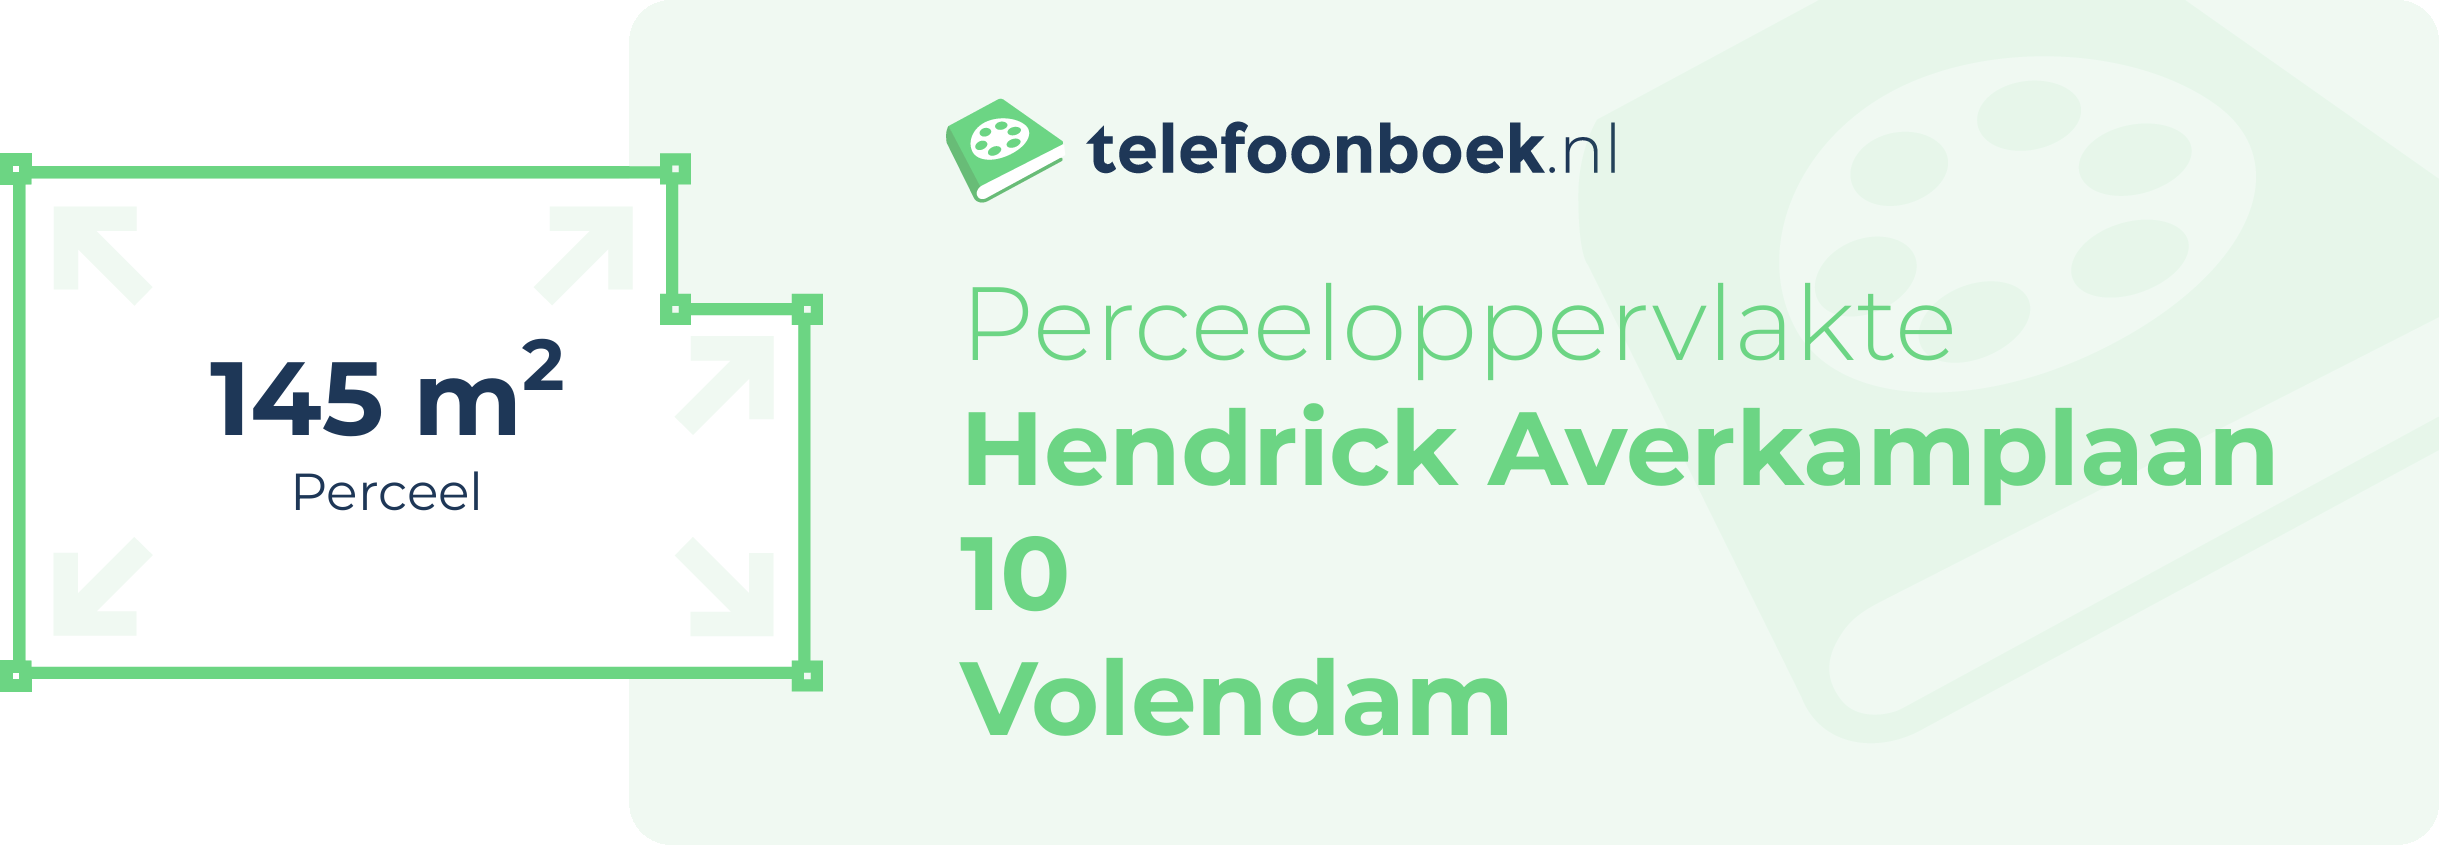 Perceeloppervlakte Hendrick Averkamplaan 10 Volendam